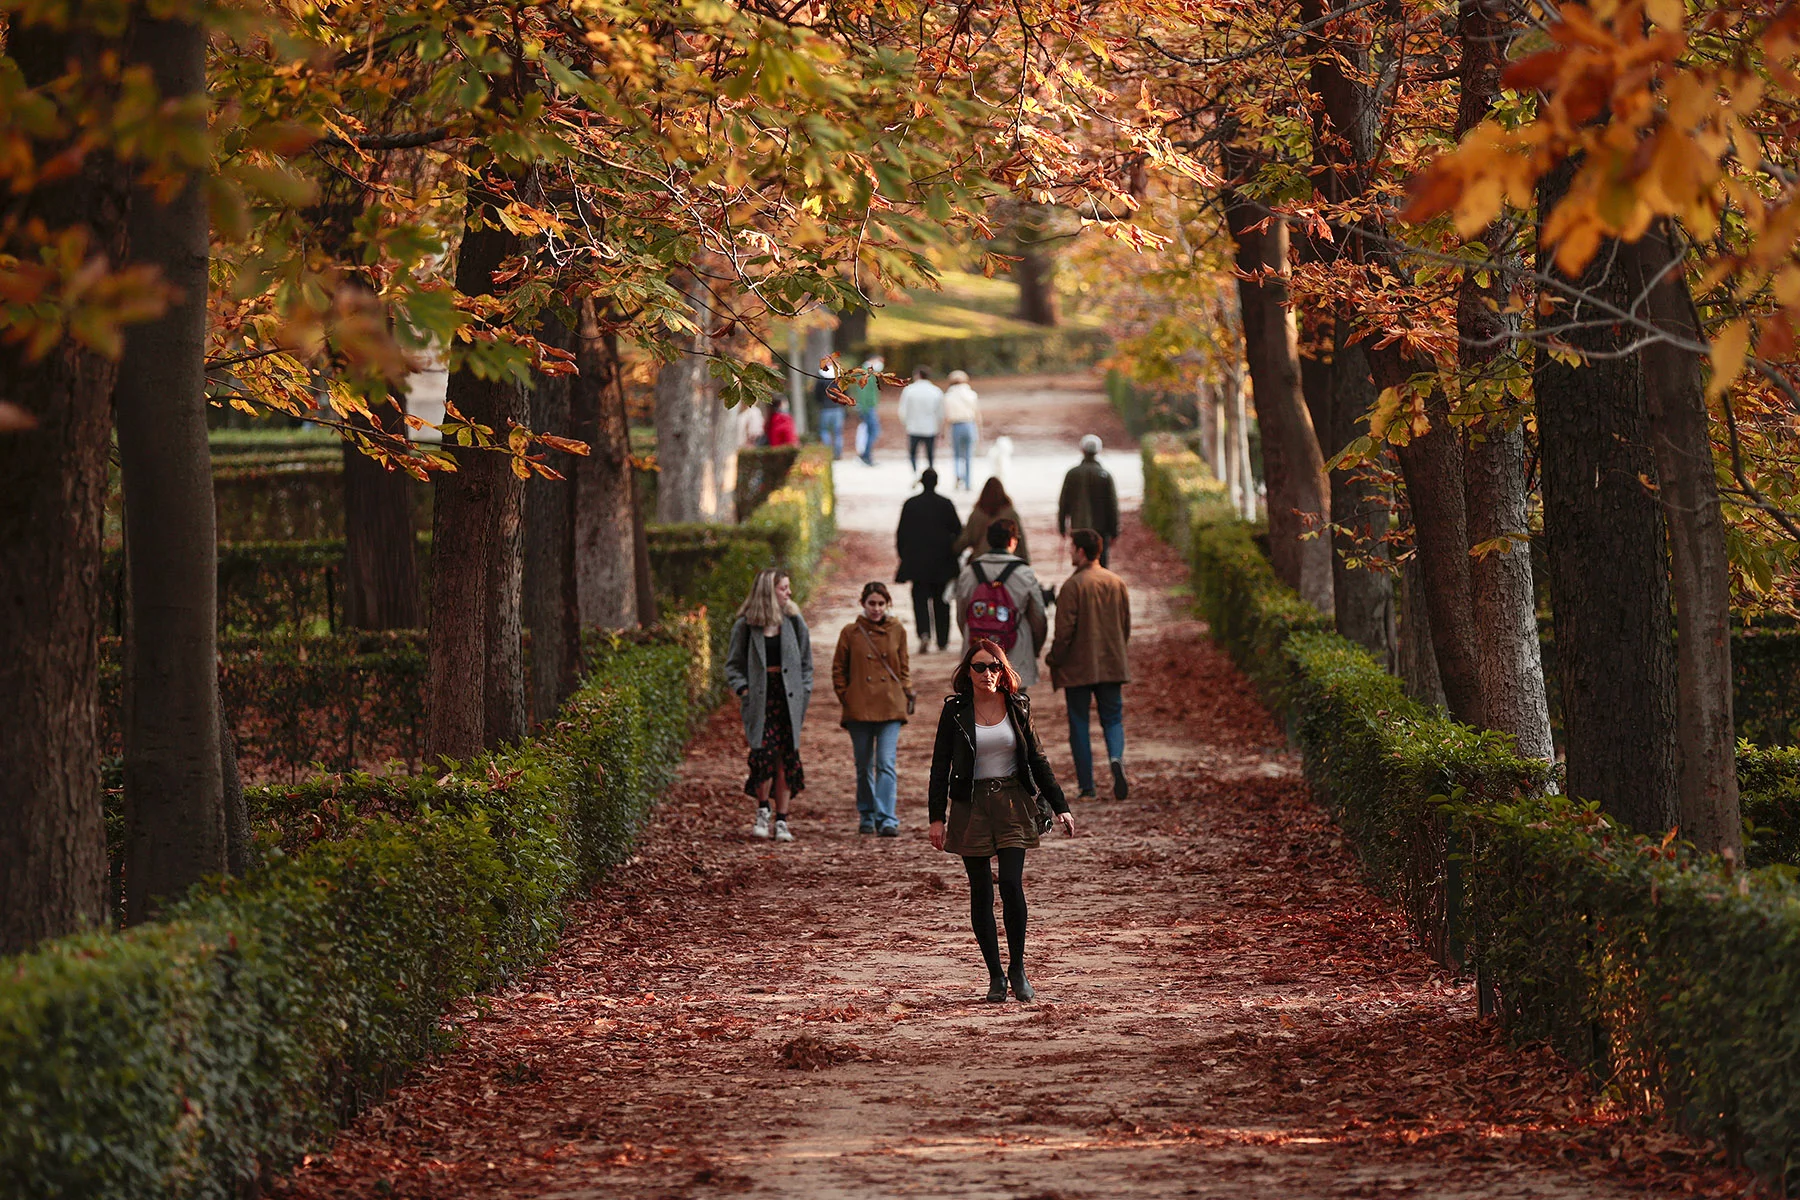 People walking through El Retiro on an autumn day in Madrid, Spain